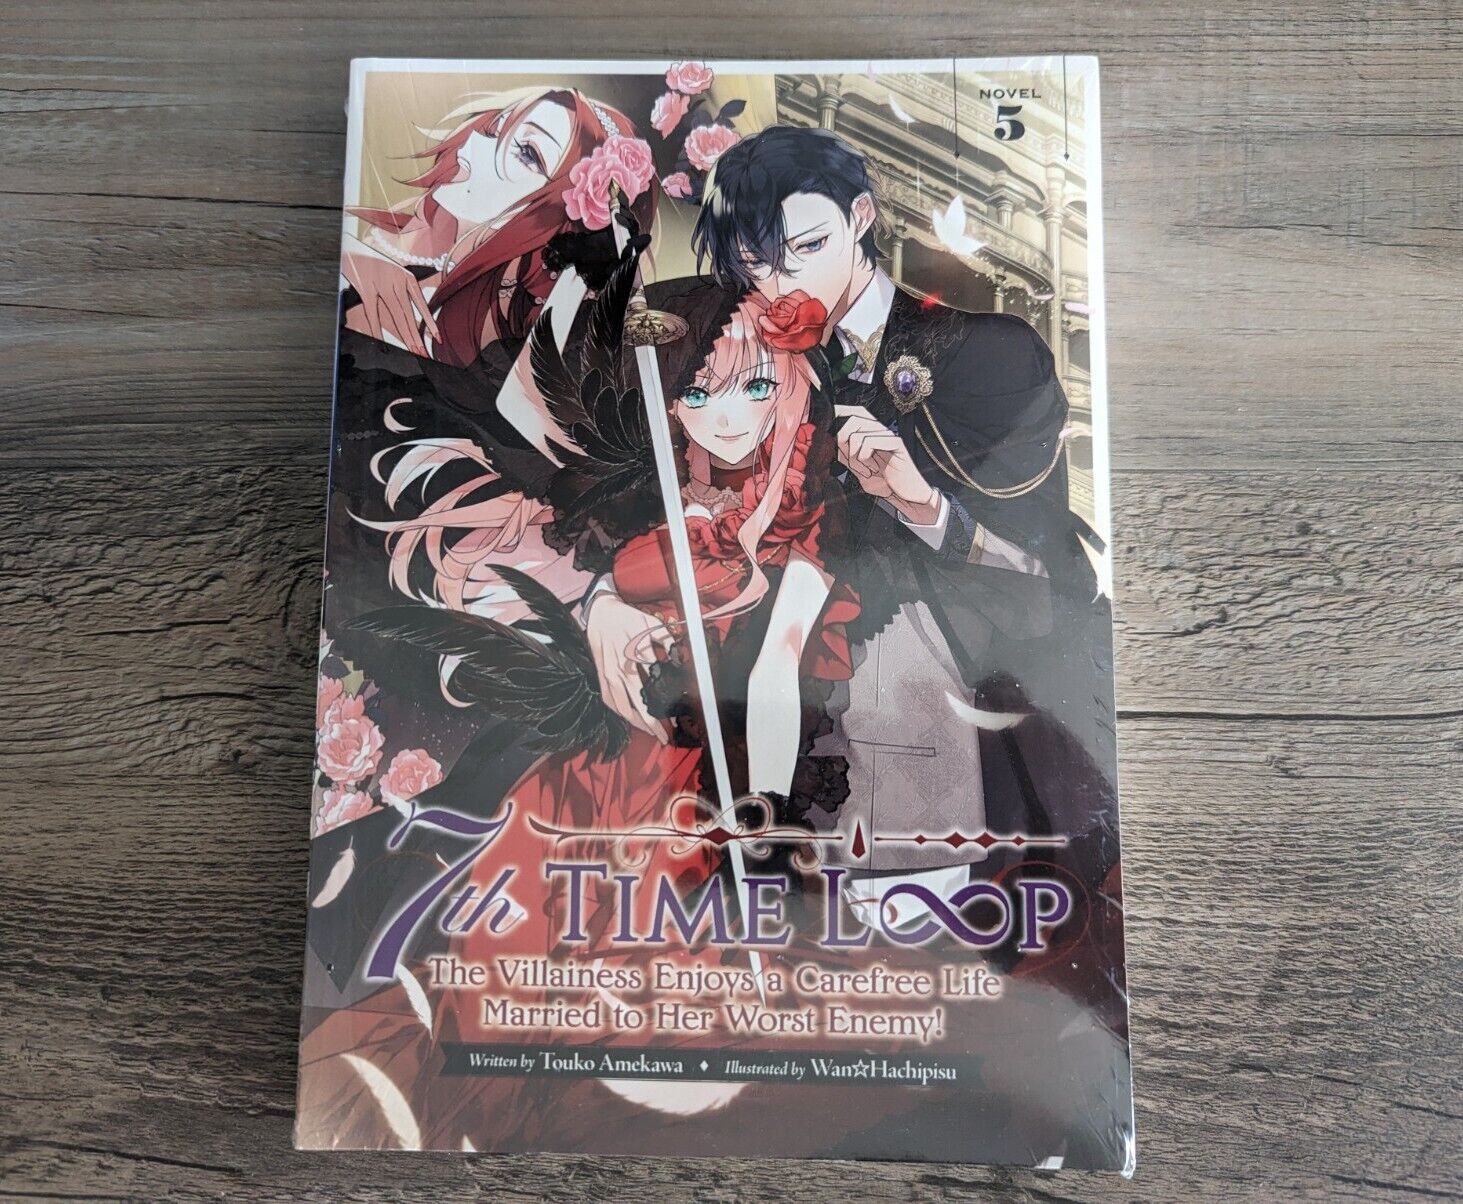 7th Time Loop Vol 5 - Brand New English Light Novel Touko Amekawa Wan Hachipisu